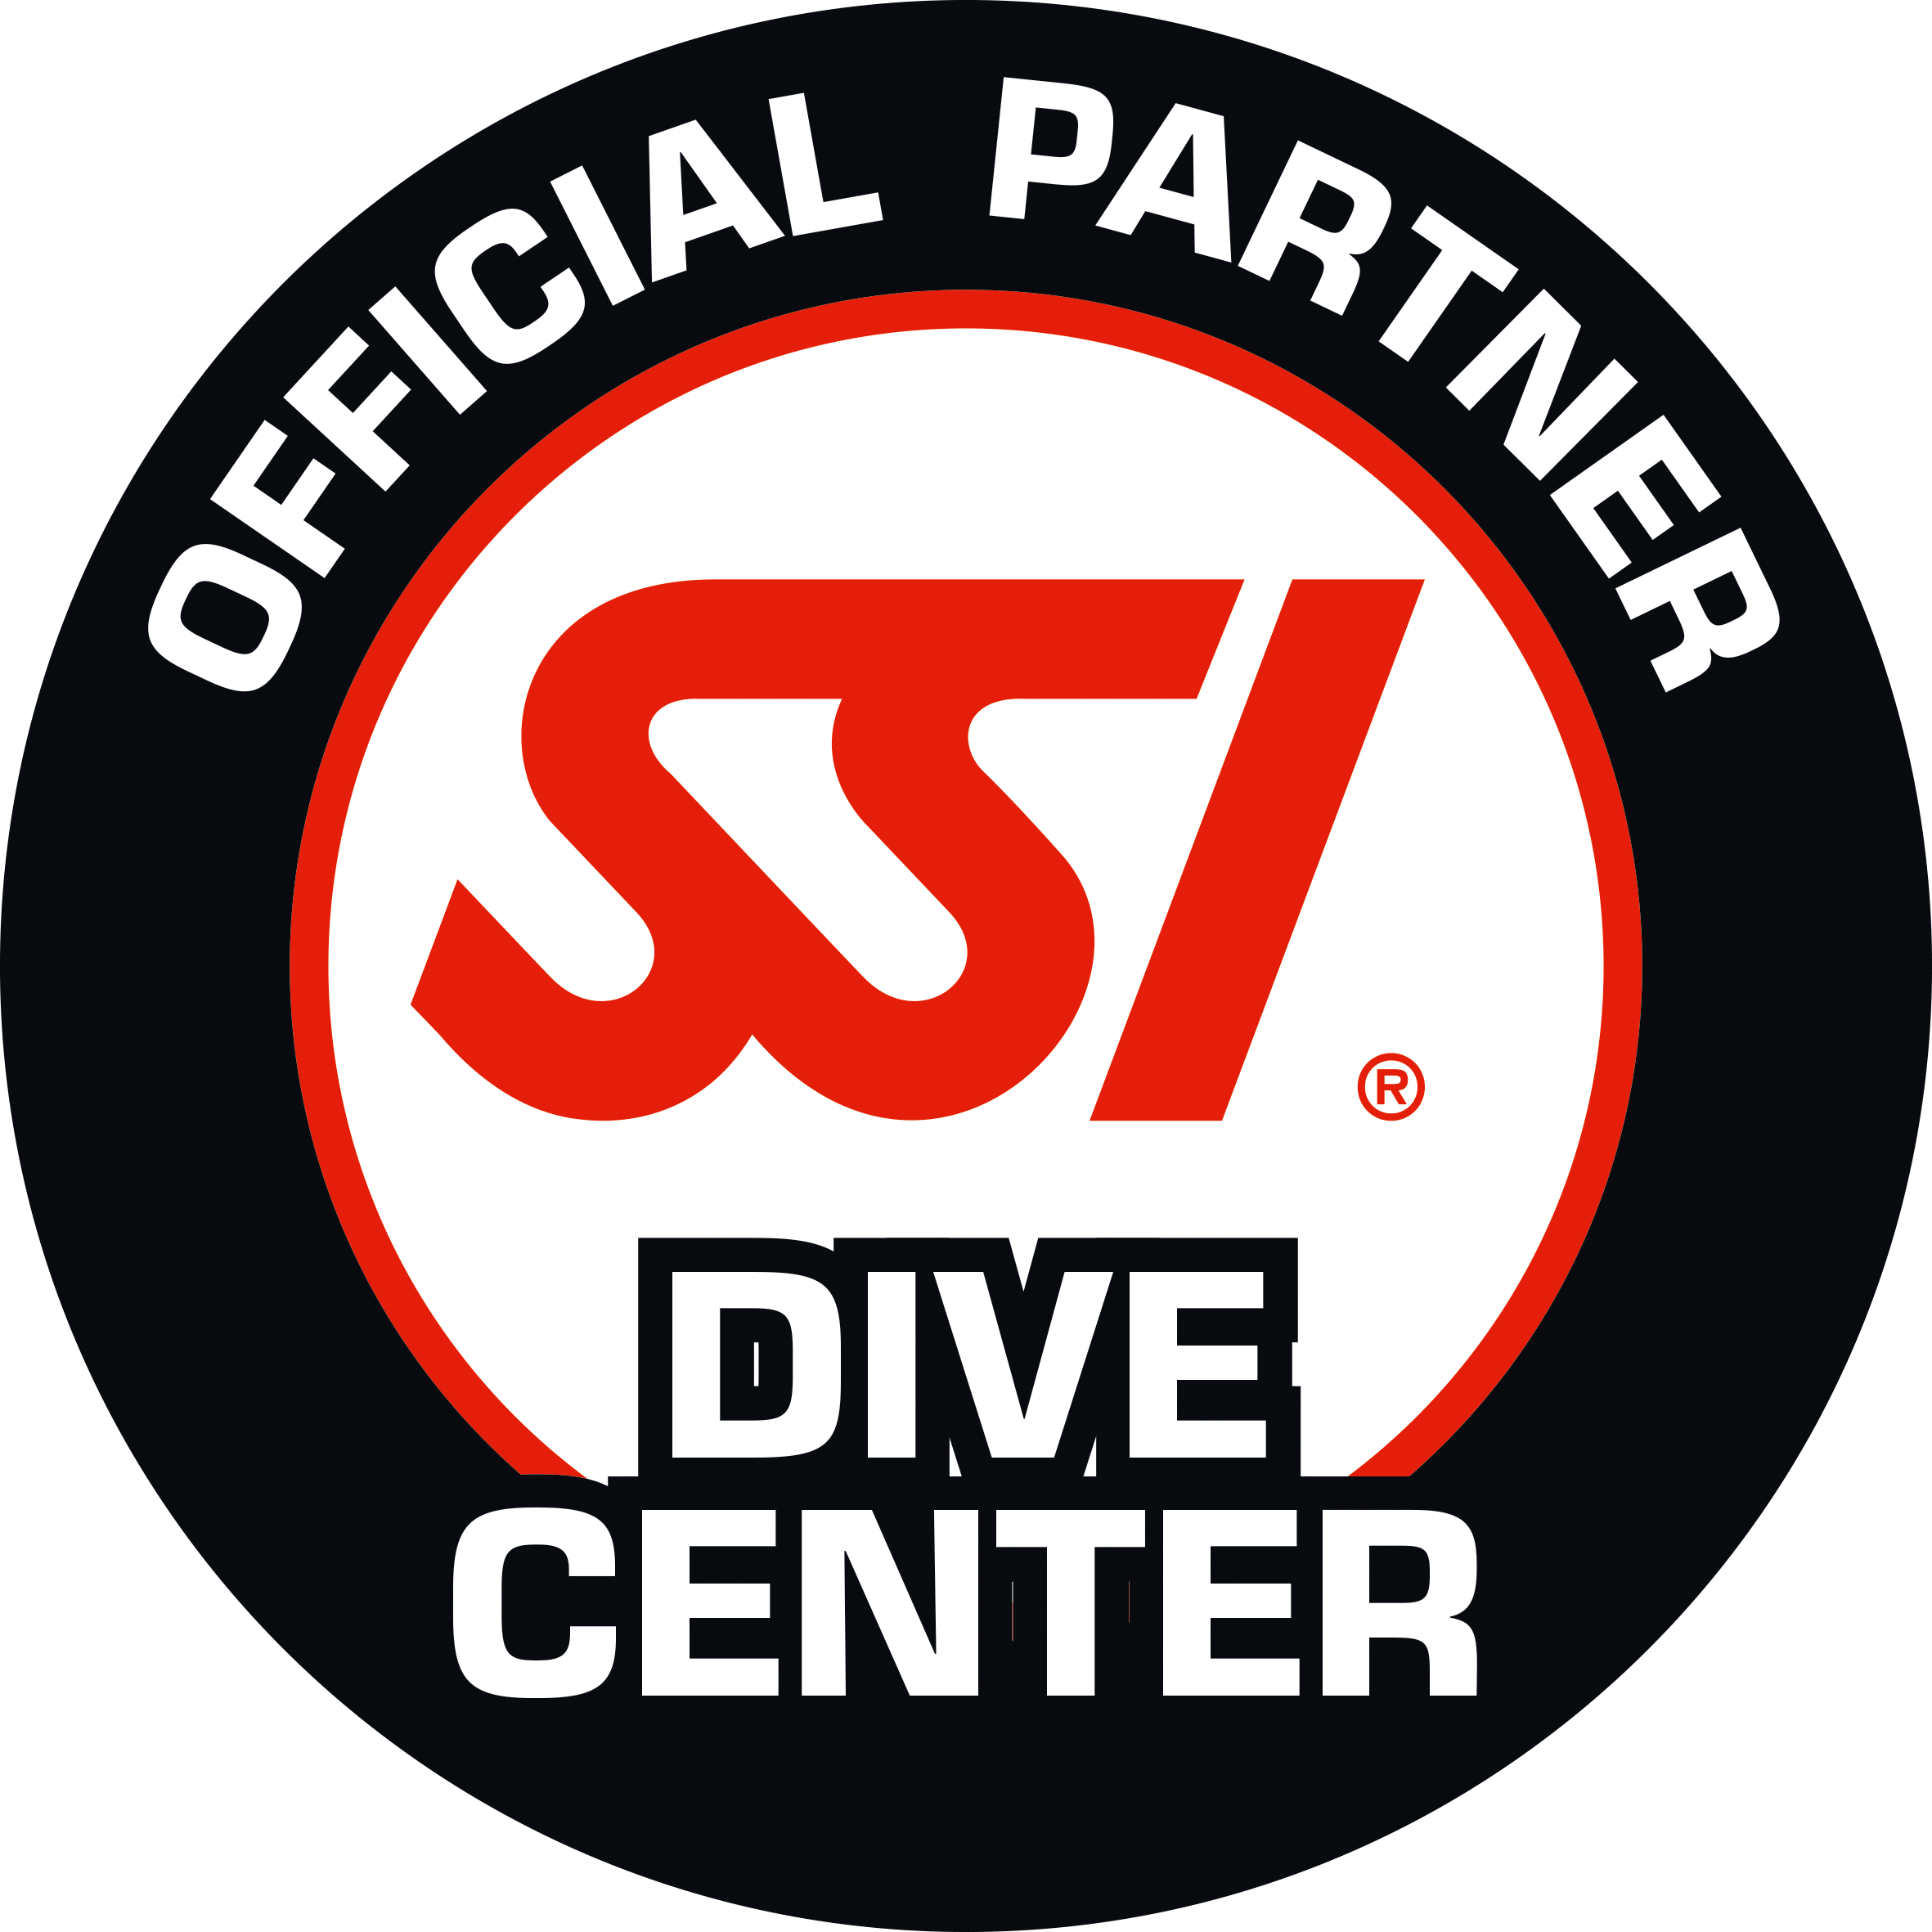 Get certified as a scuba diver